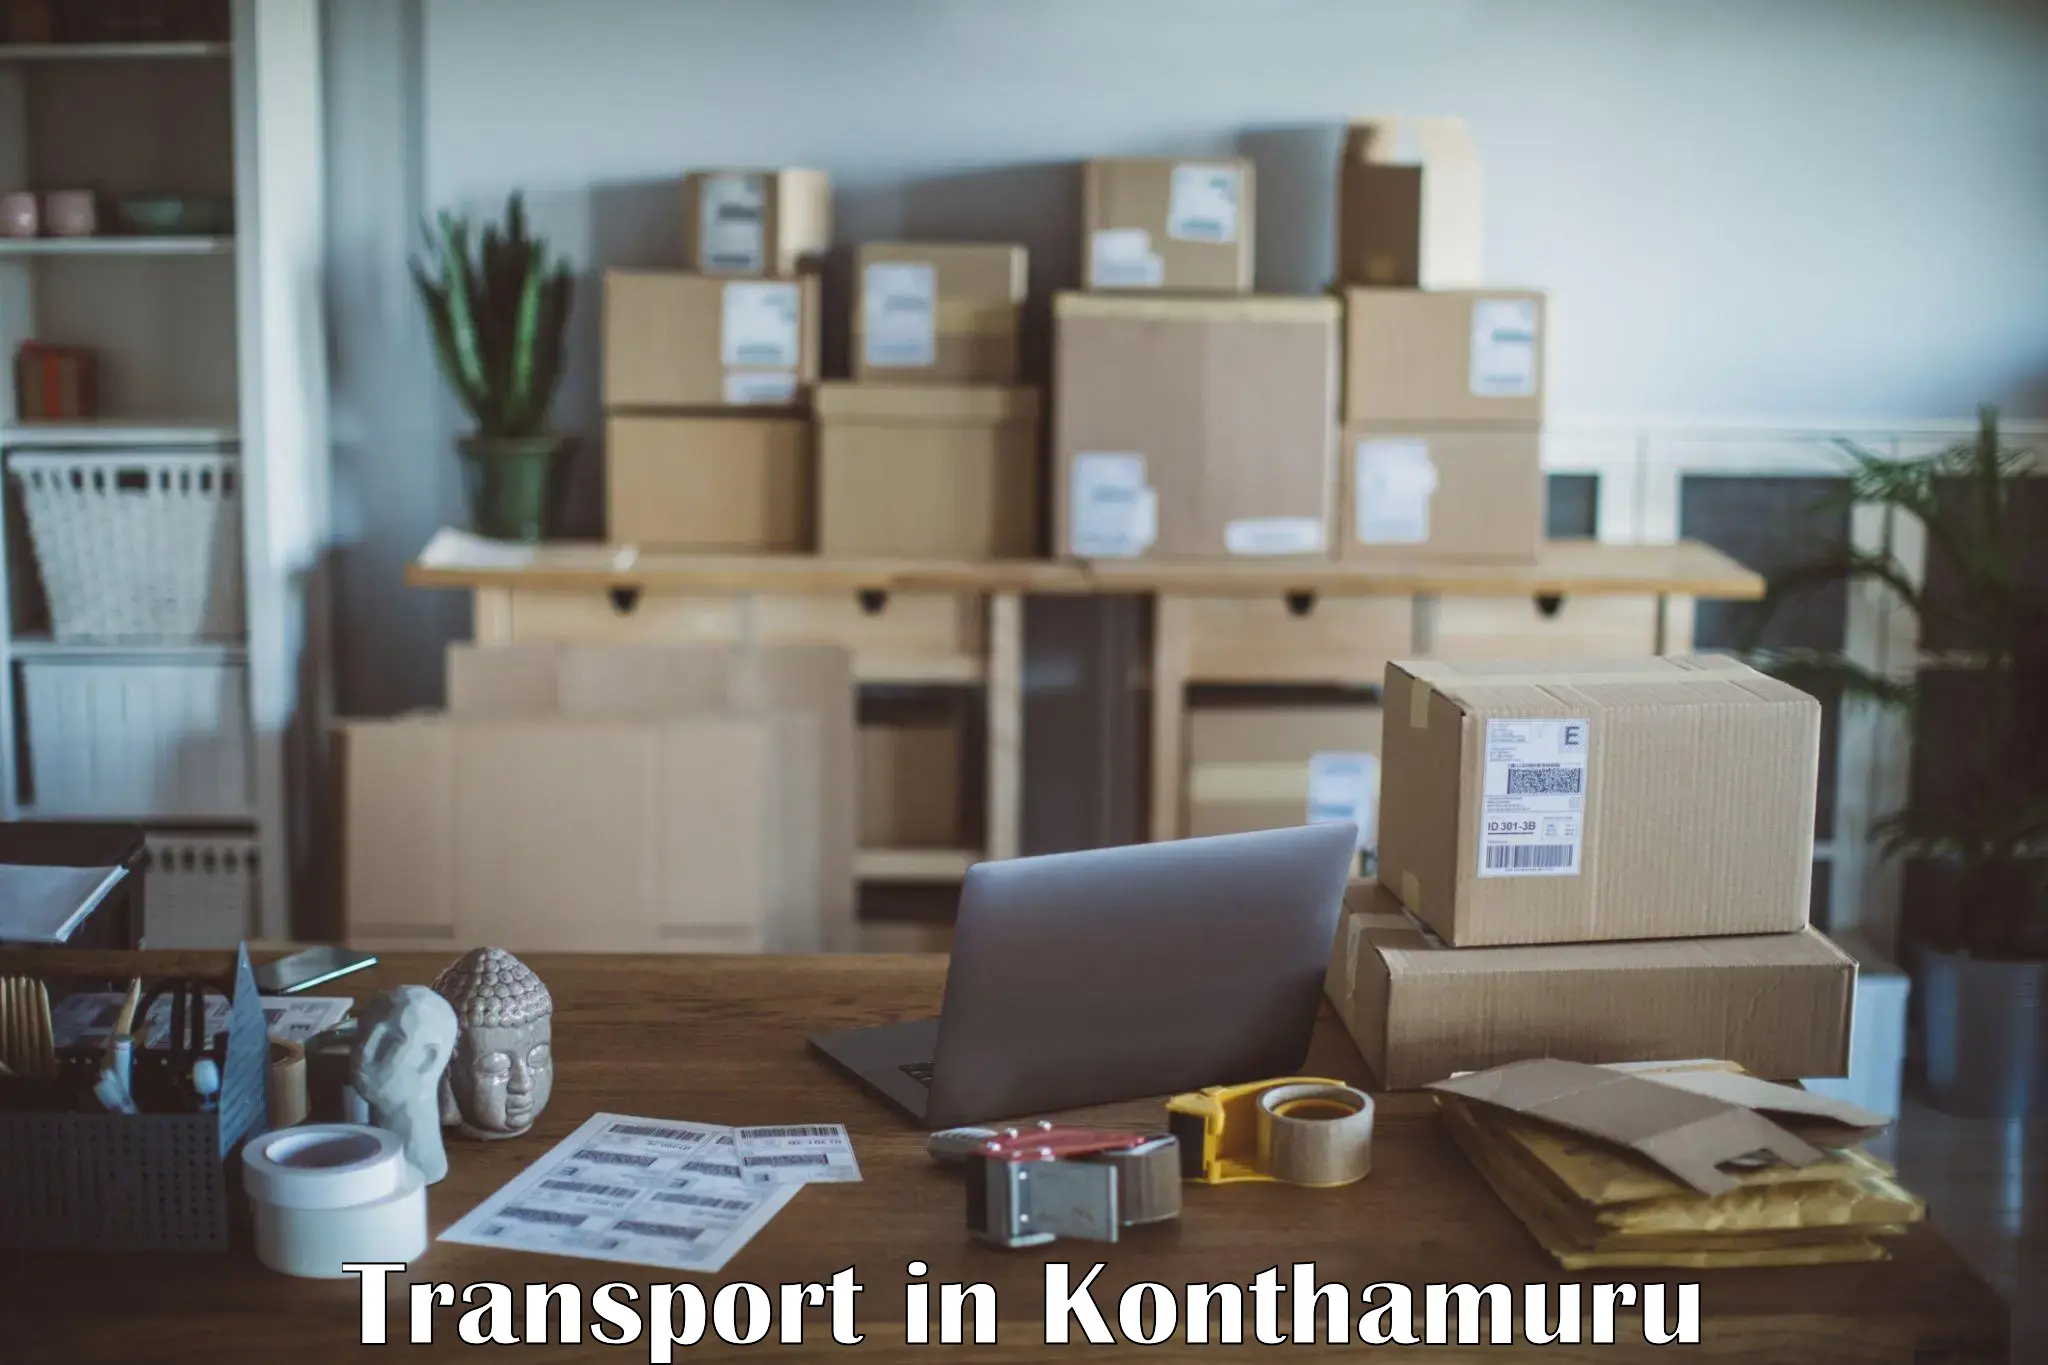 Daily parcel service transport in Konthamuru